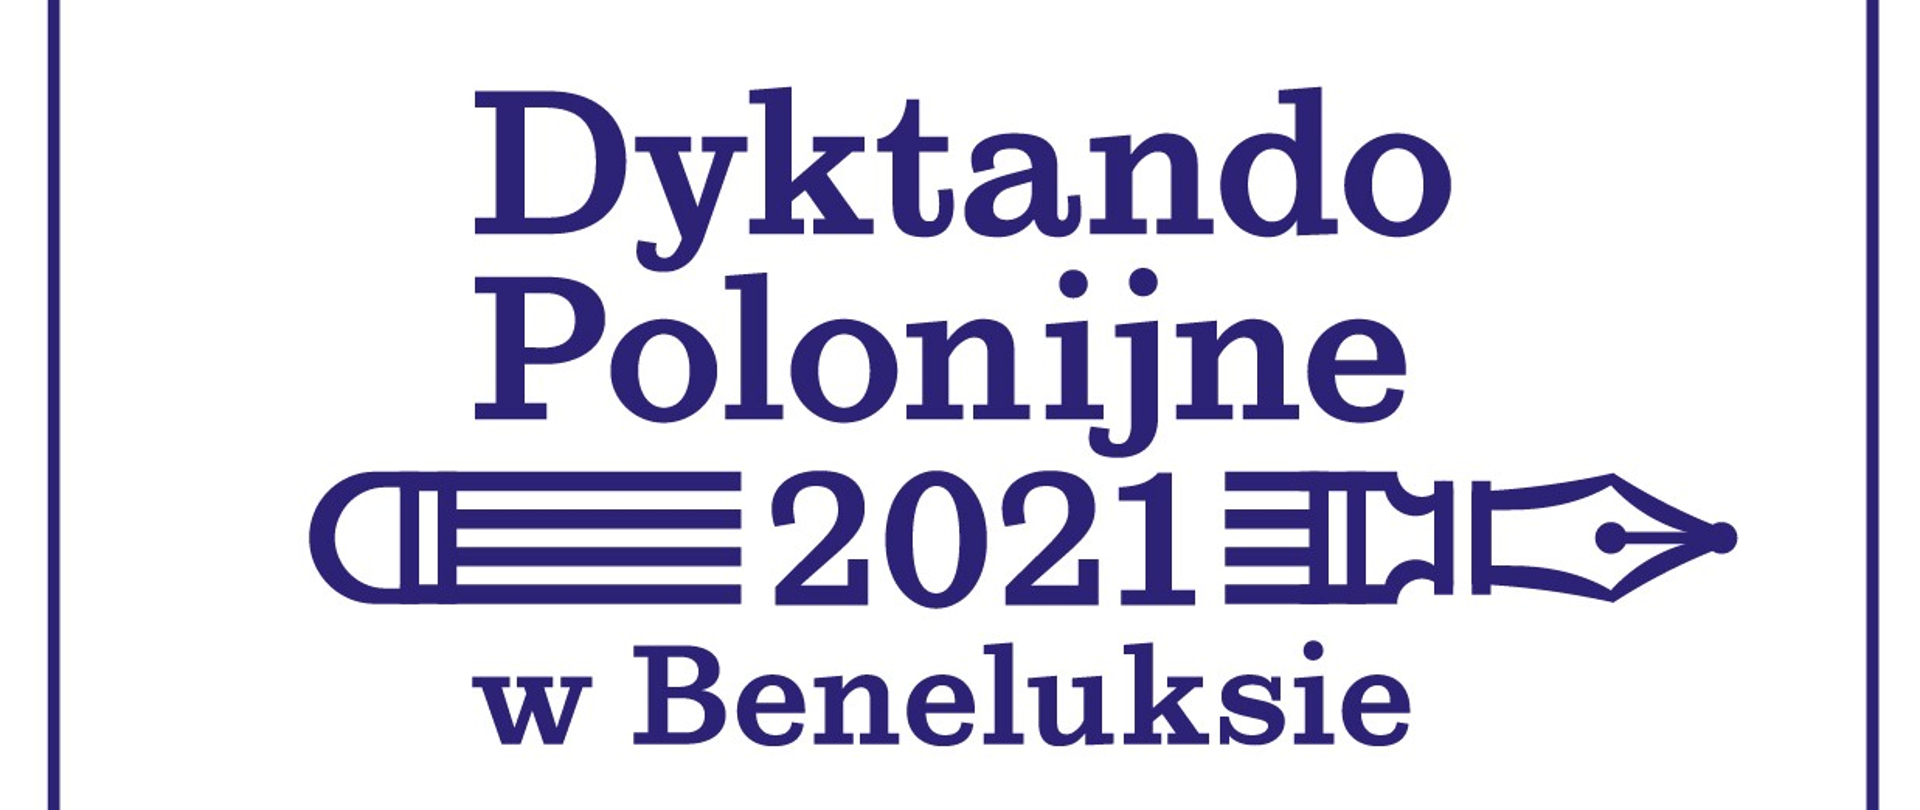 dyktando polonijne 2021